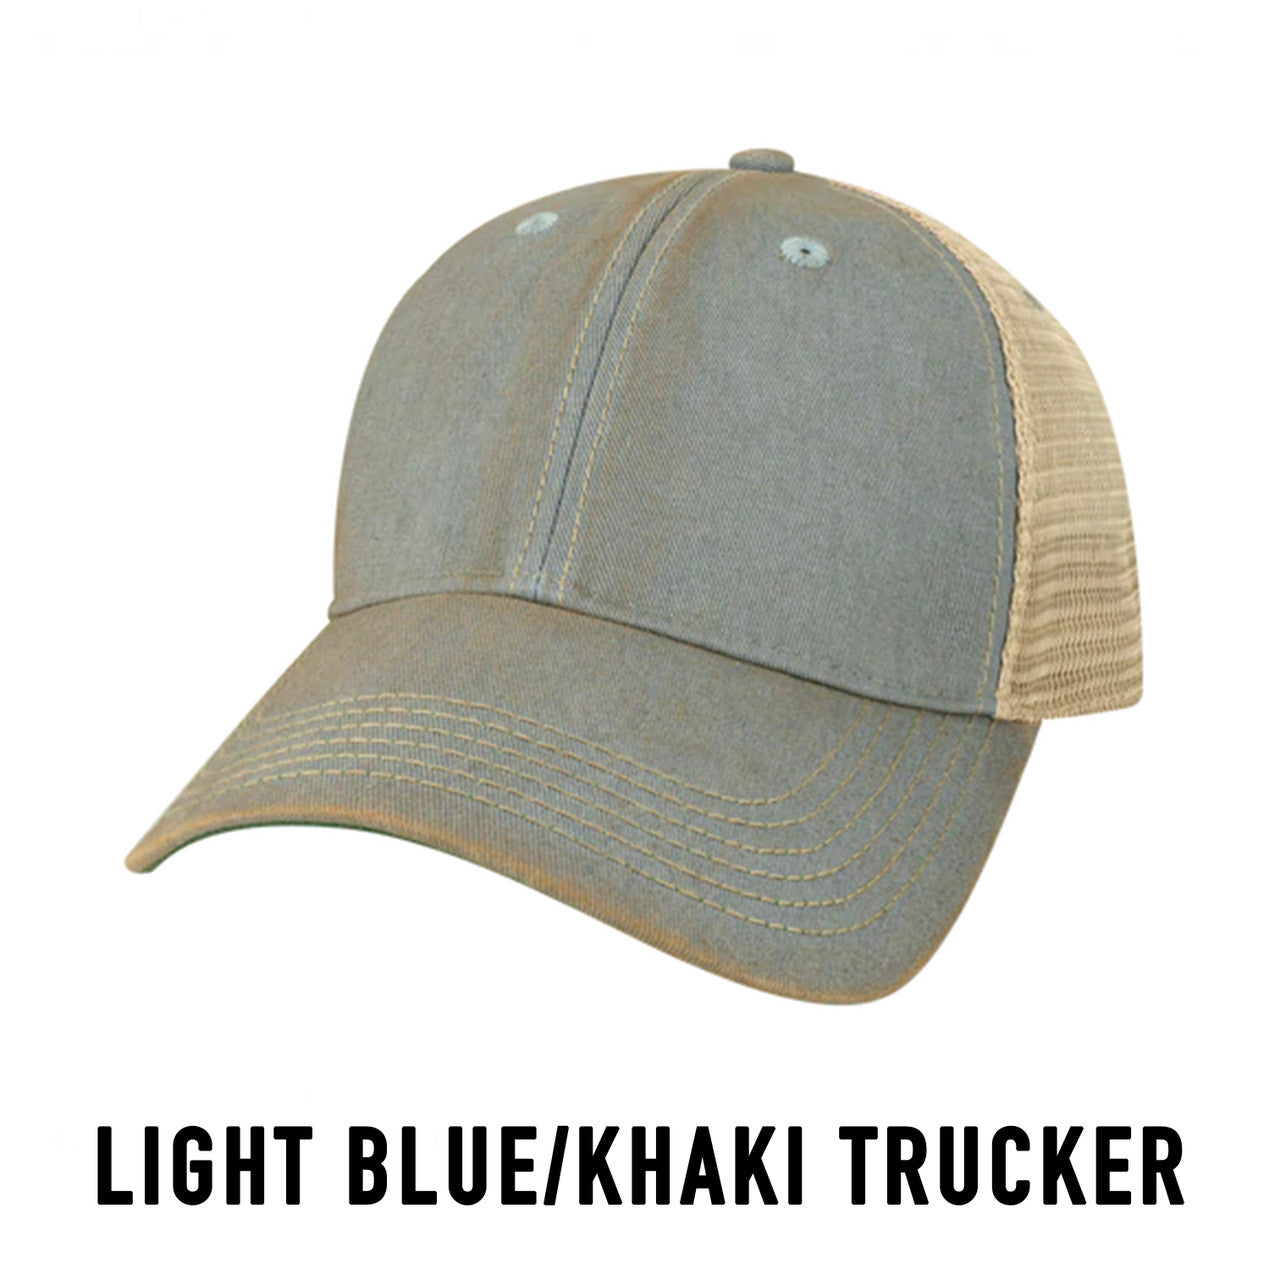 Murray's Trucker Hat Brown/Tan Mesh